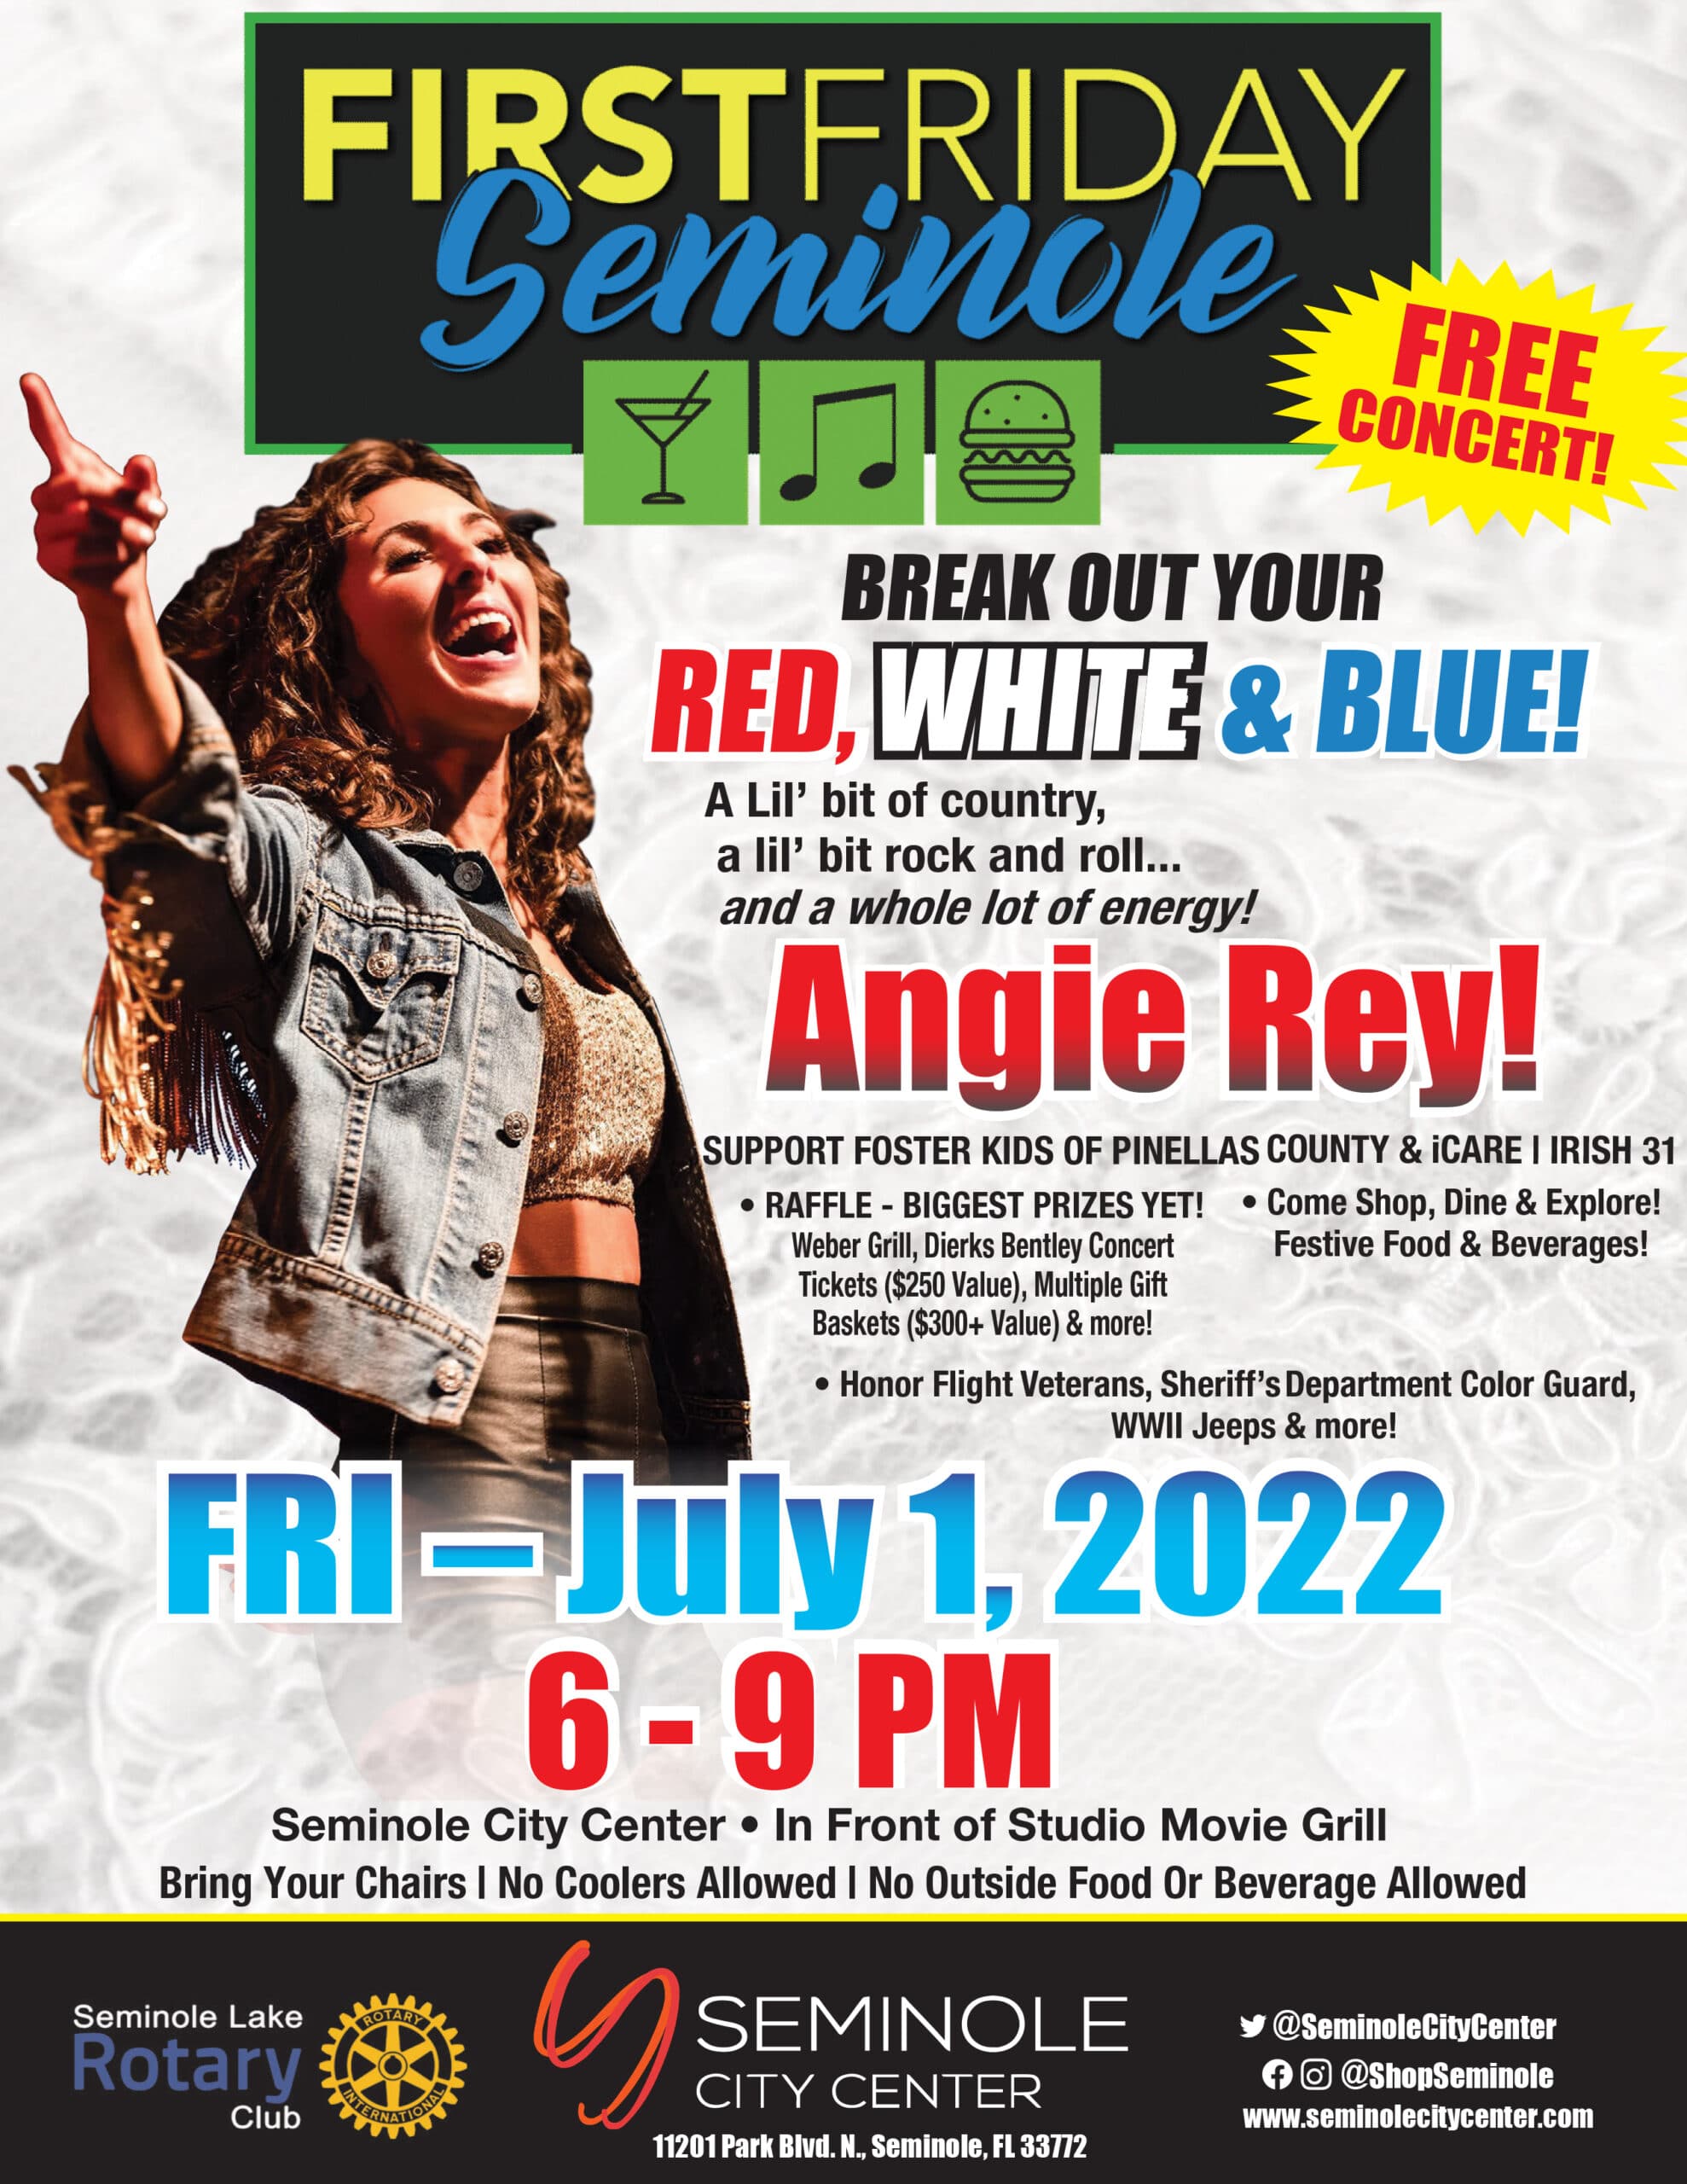 First Friday Seminole Angie Rey Seminole City Center